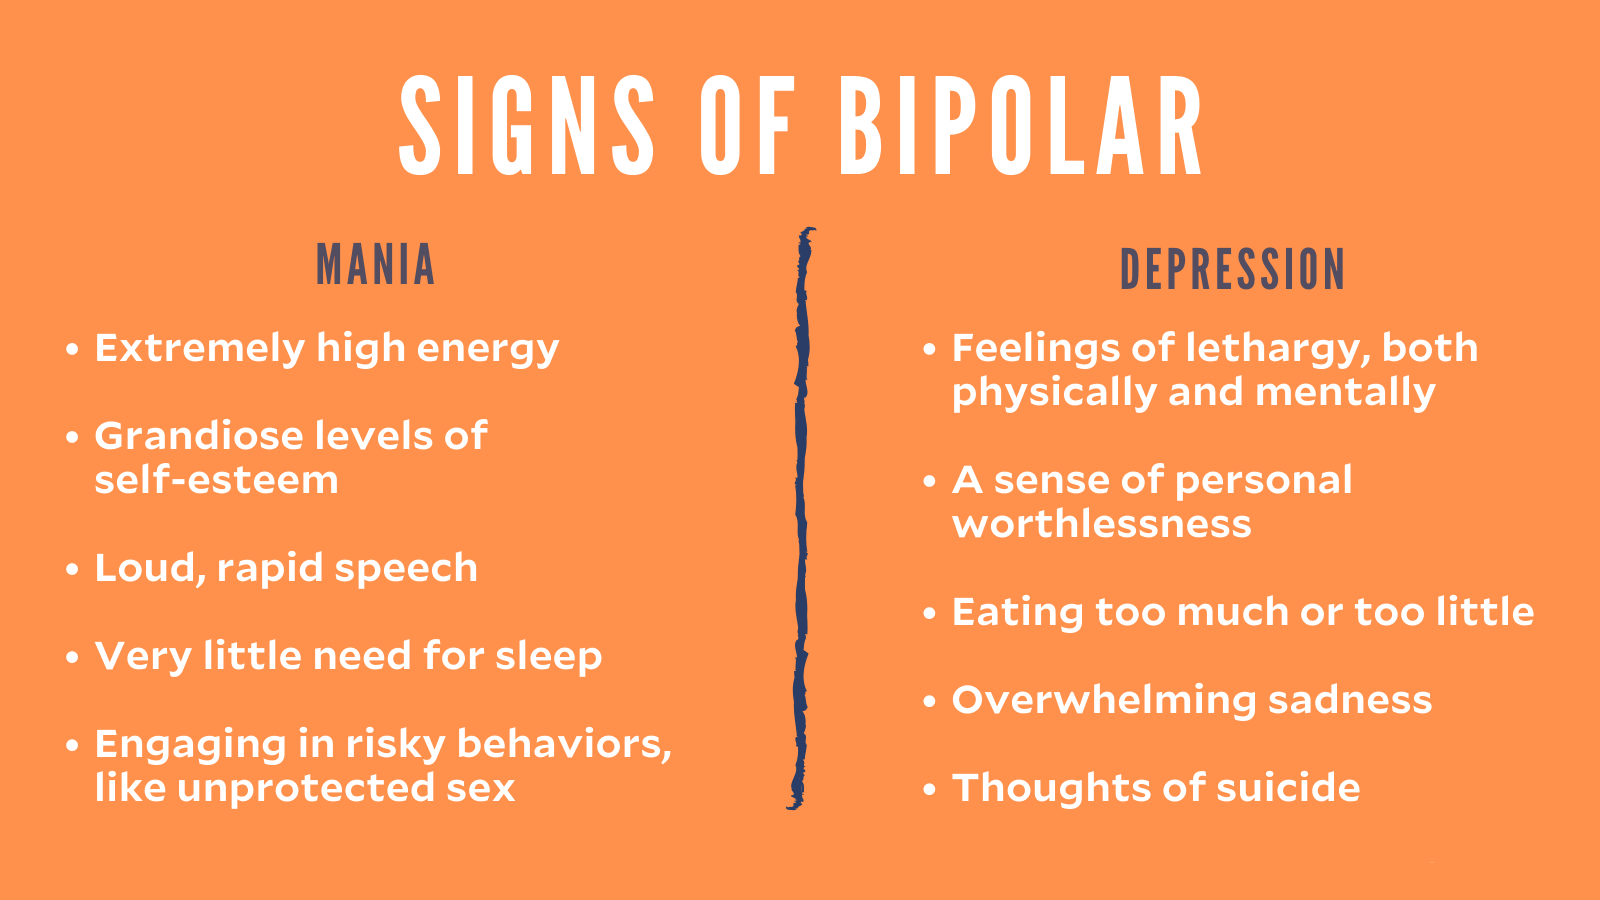 Signs of bipolar disorder